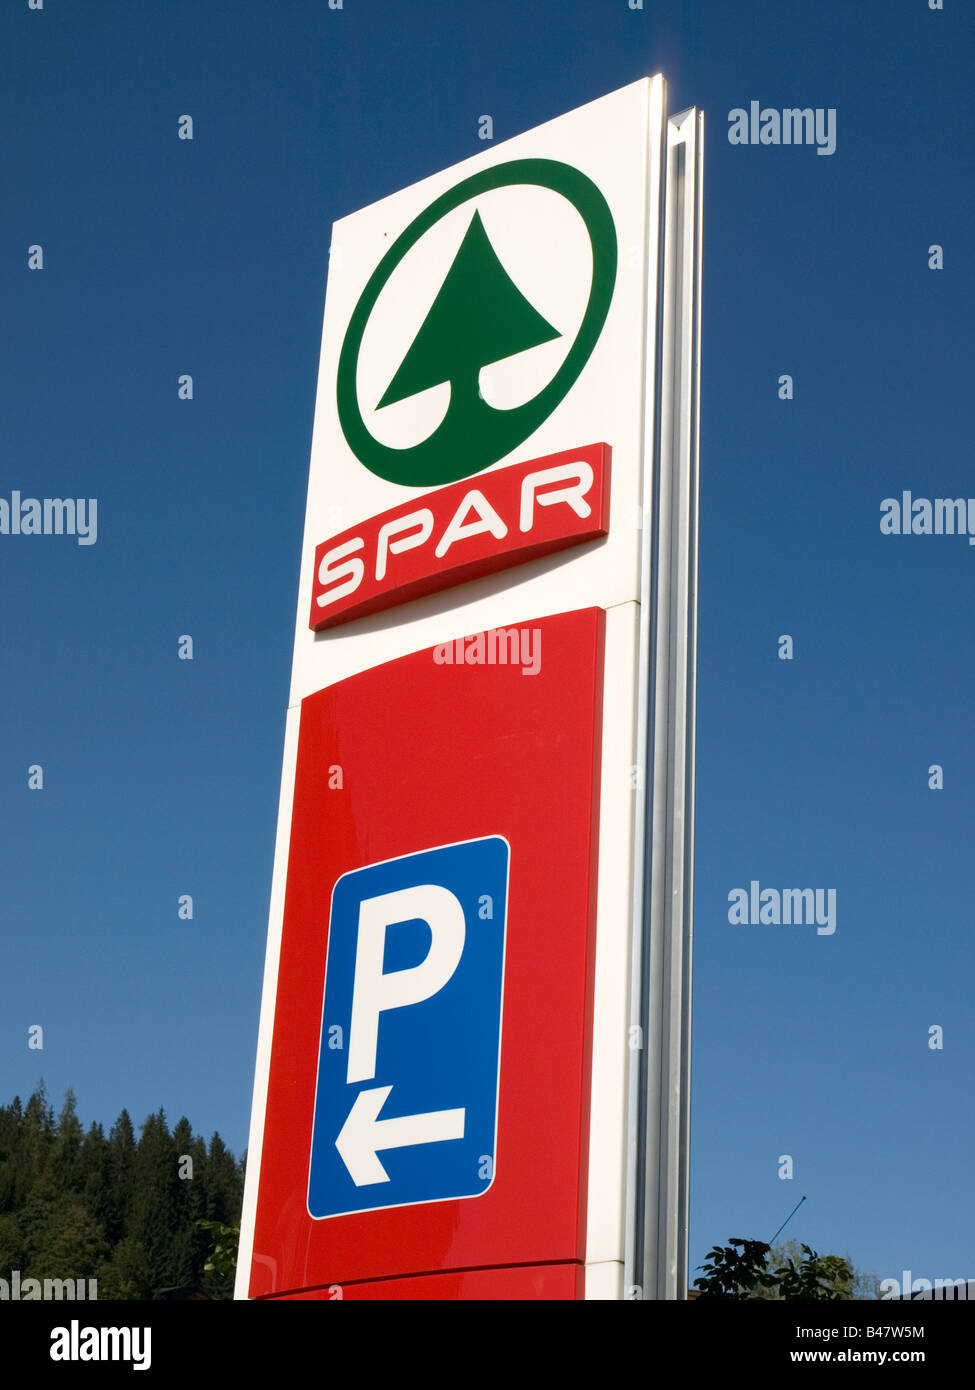 Spar supermarket and parking sign with fir tree logo Oberau Austria Stock Photo